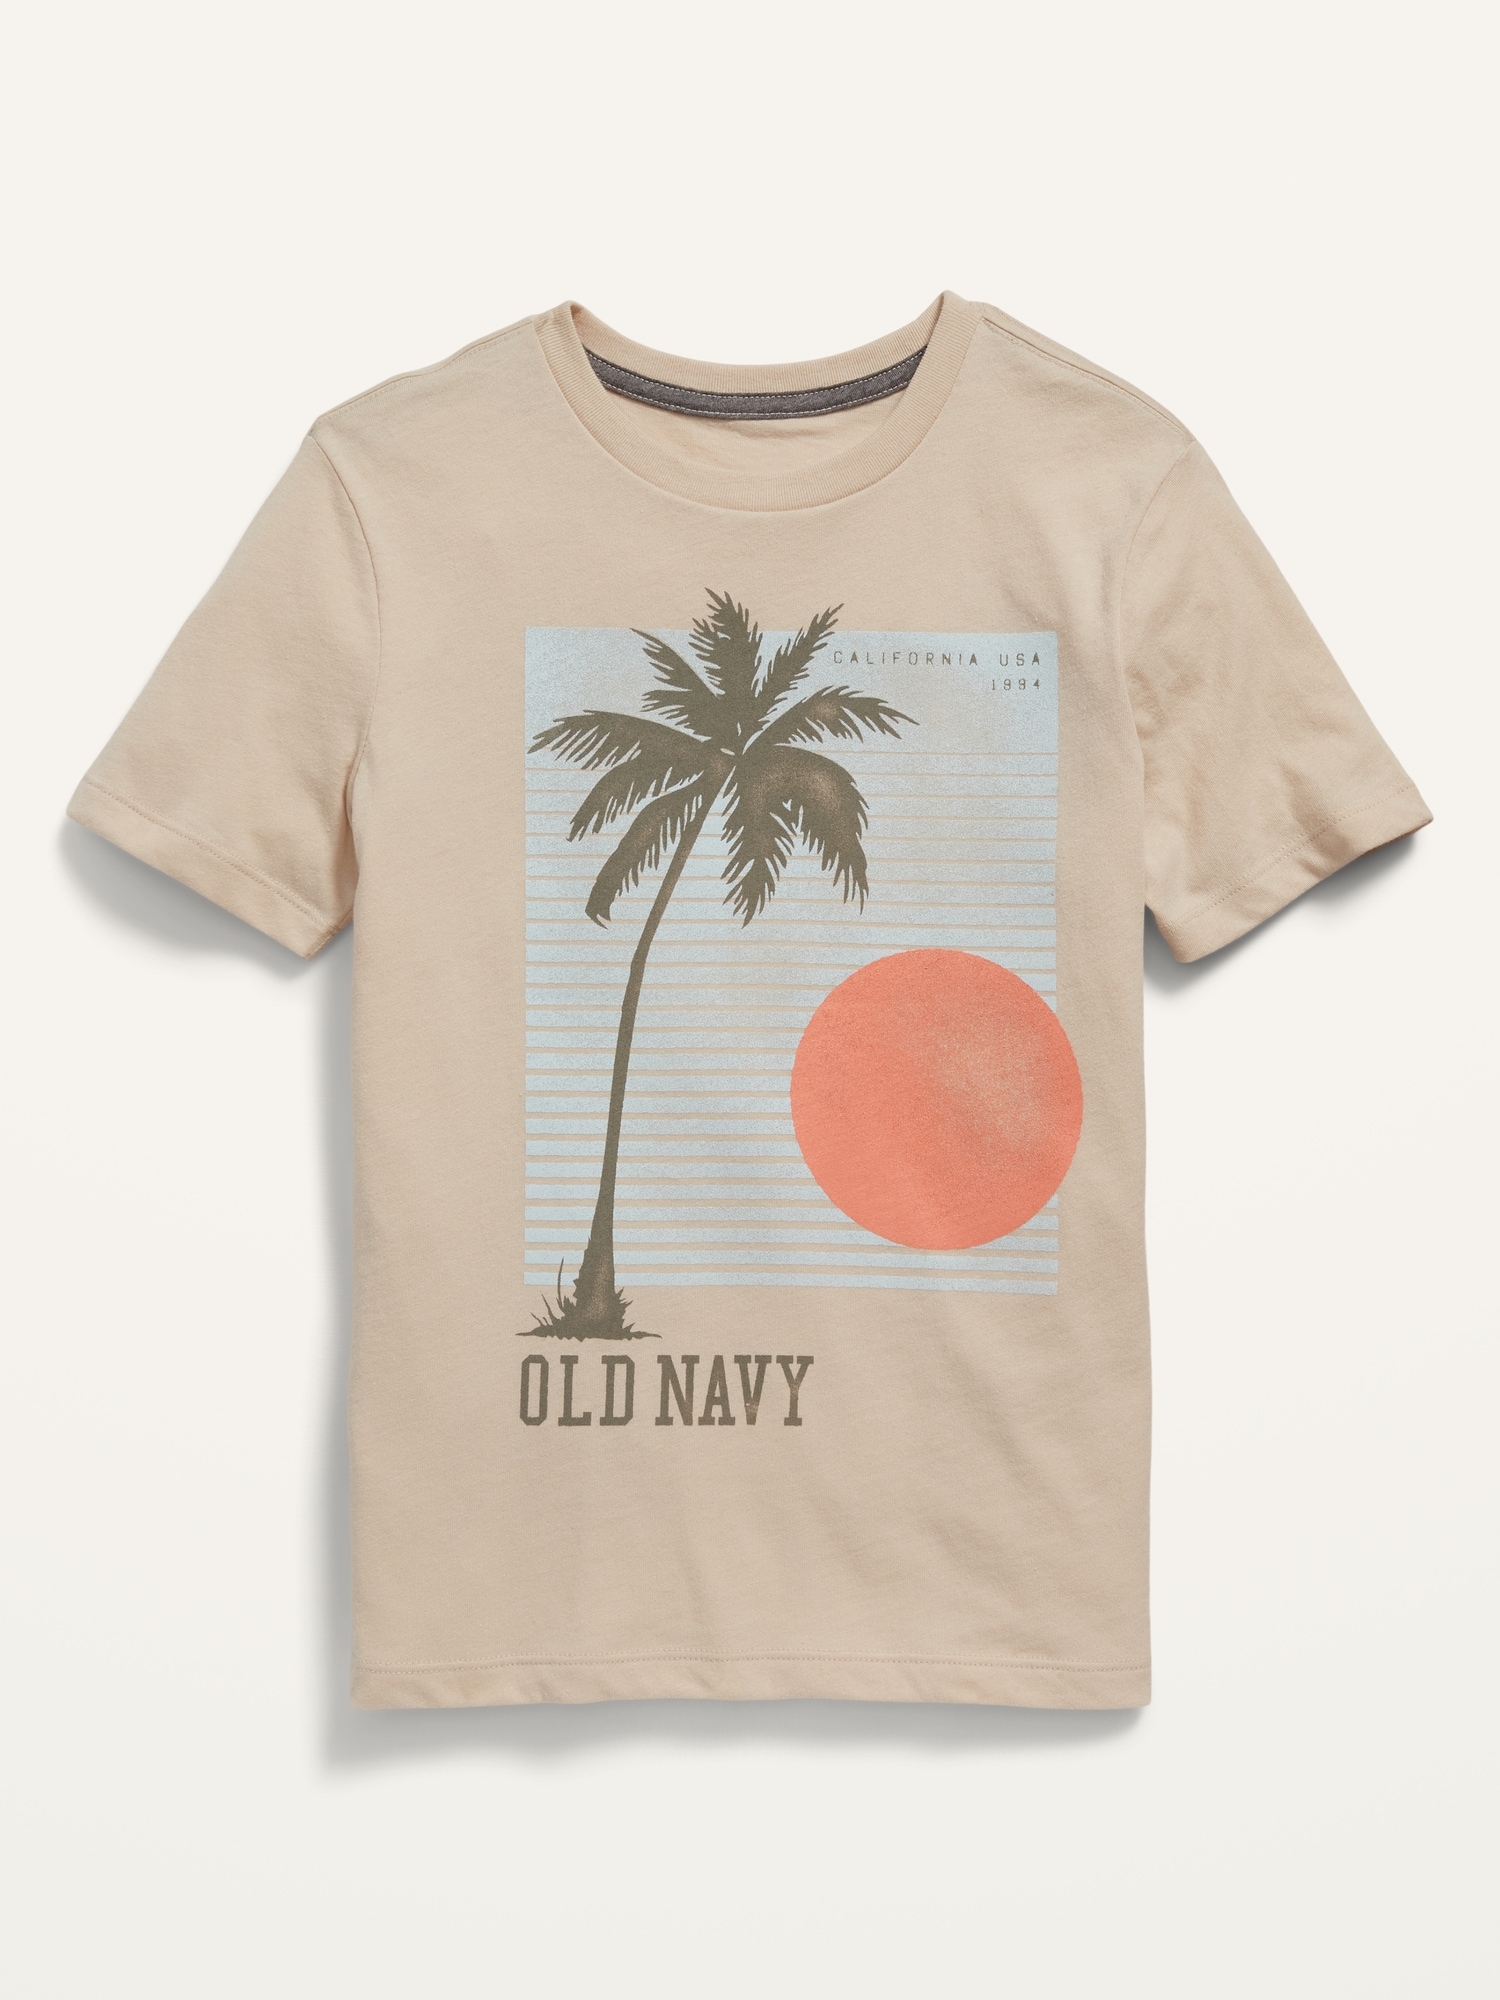 Old Navy Desert Graphic T-shirt Men's Size Small